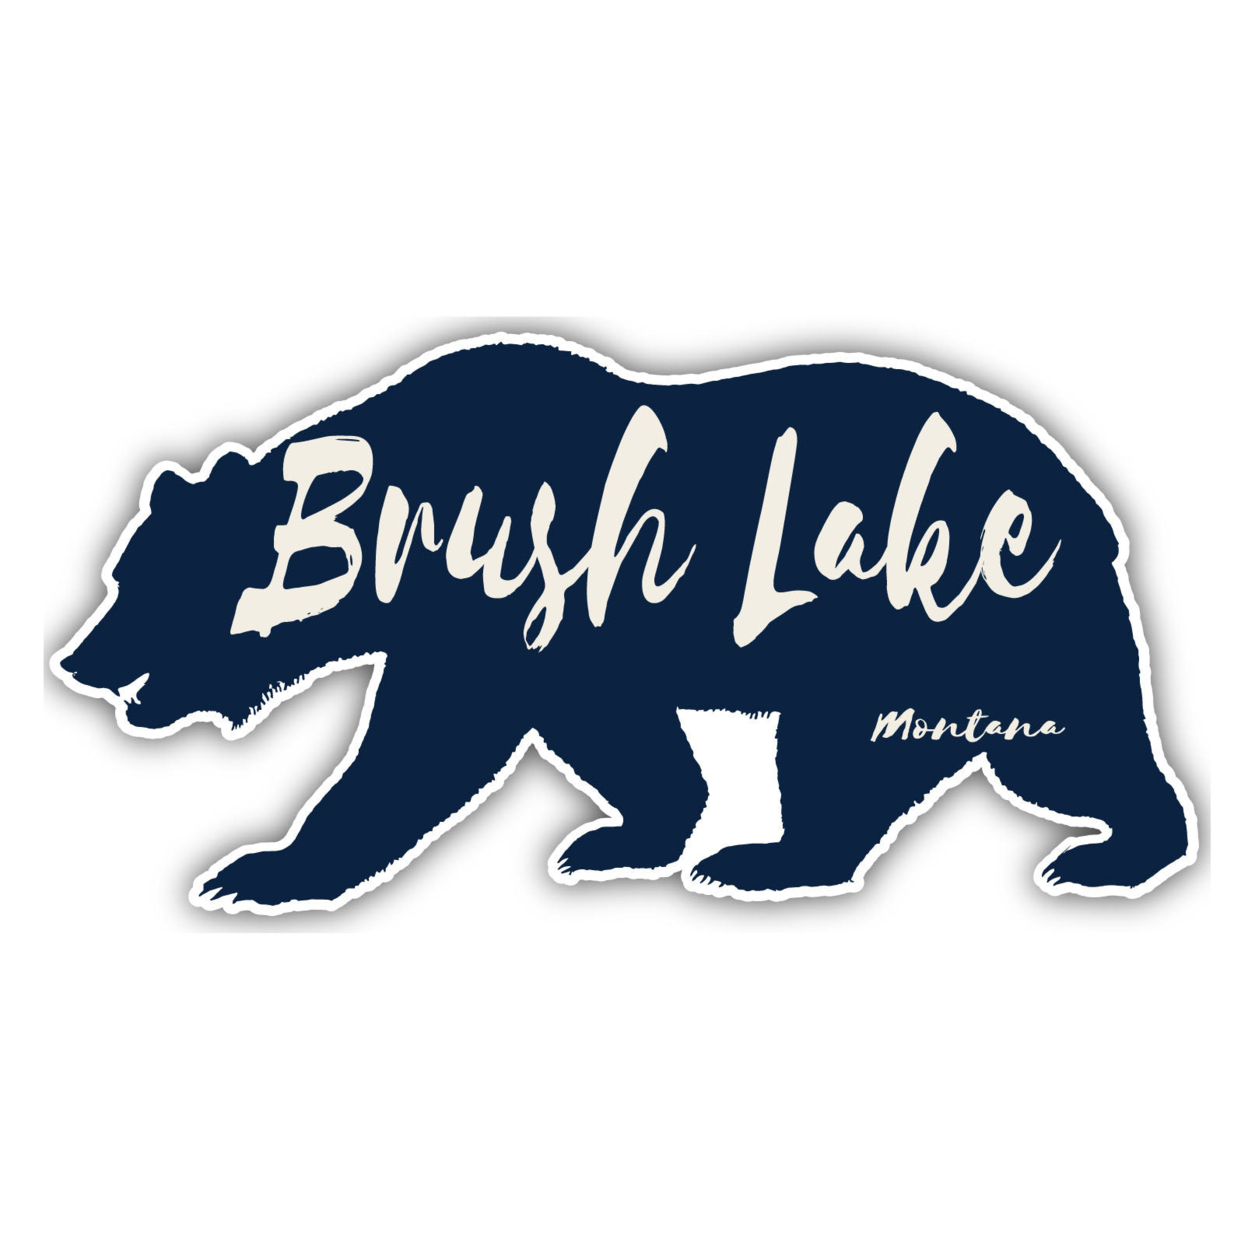 Brush Lake Montana Souvenir Decorative Stickers (Choose Theme And Size) - 4-Pack, 12-Inch, Bear